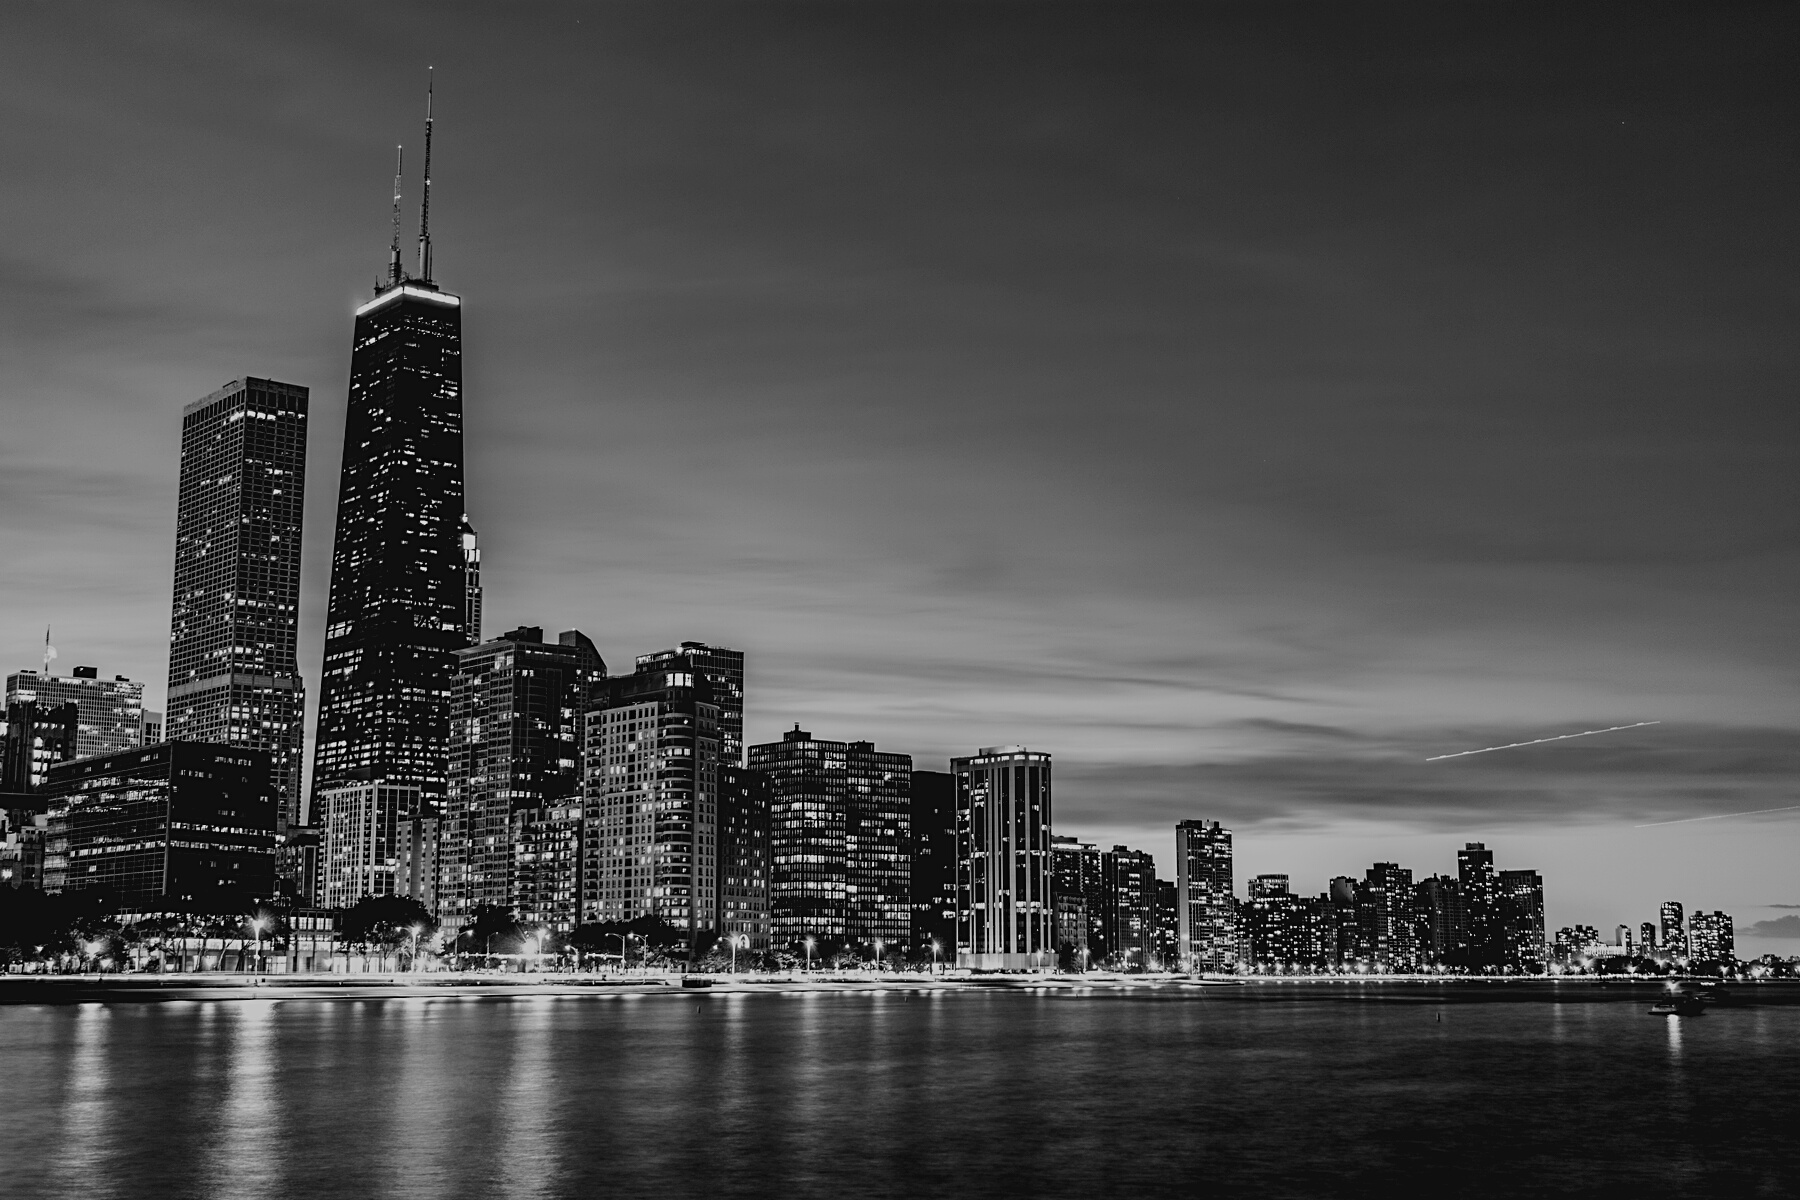 Black and White Chicago Skyline at Night